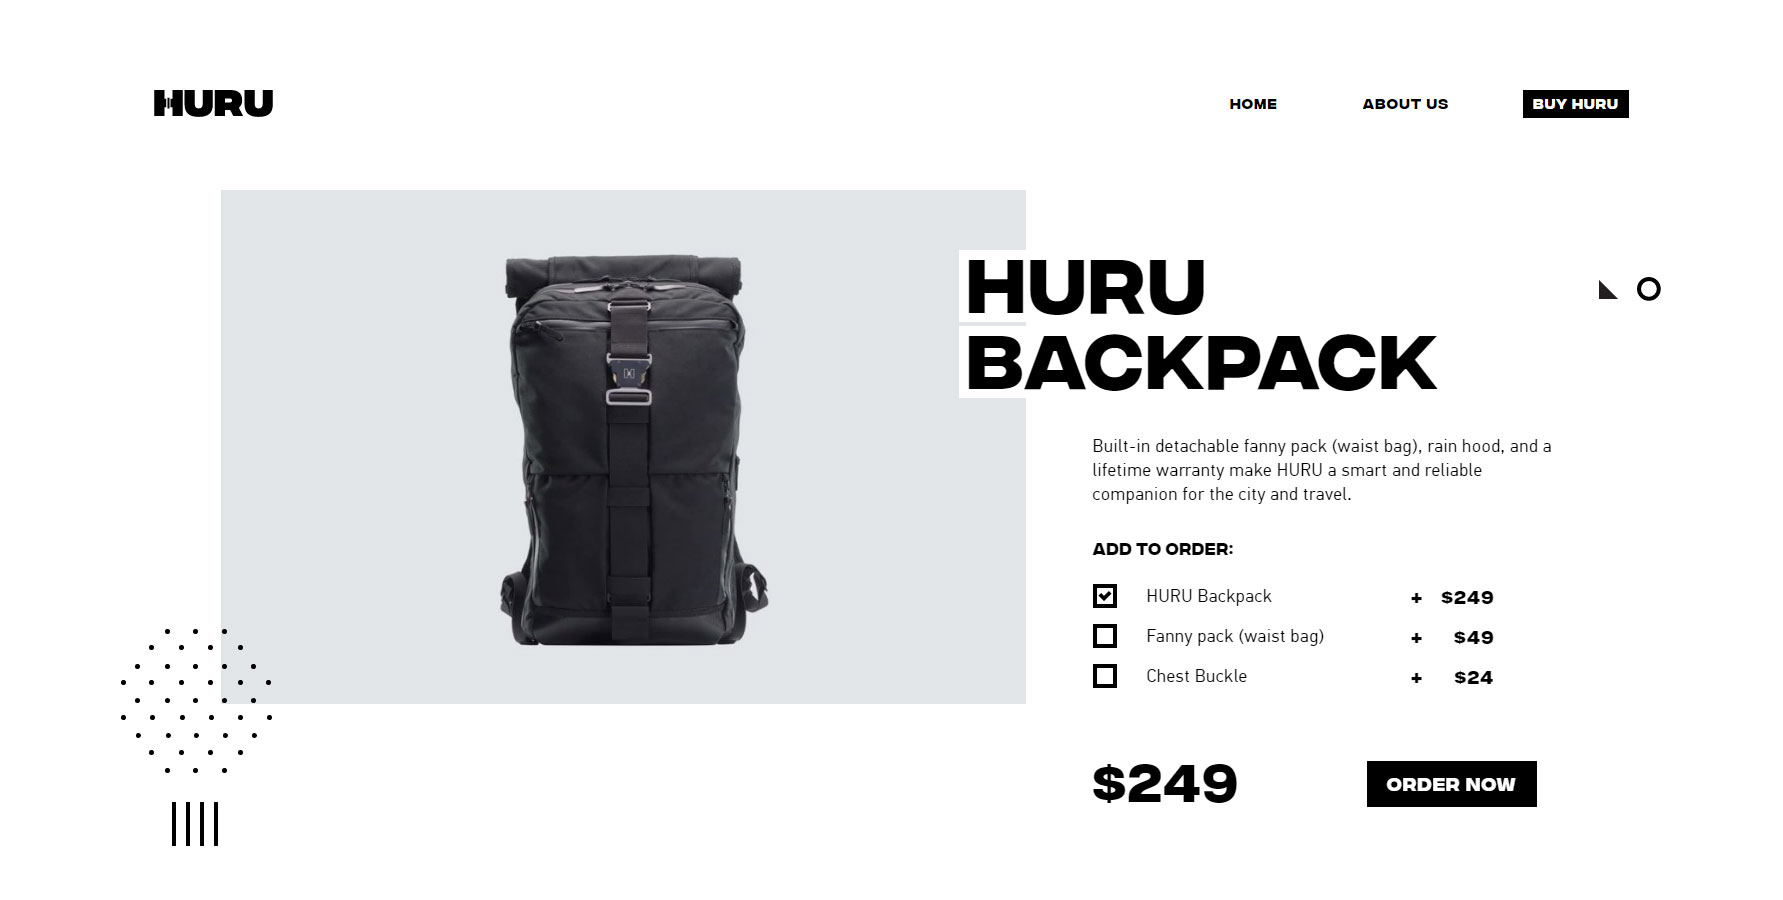 Huru Backpack - Website of the Day